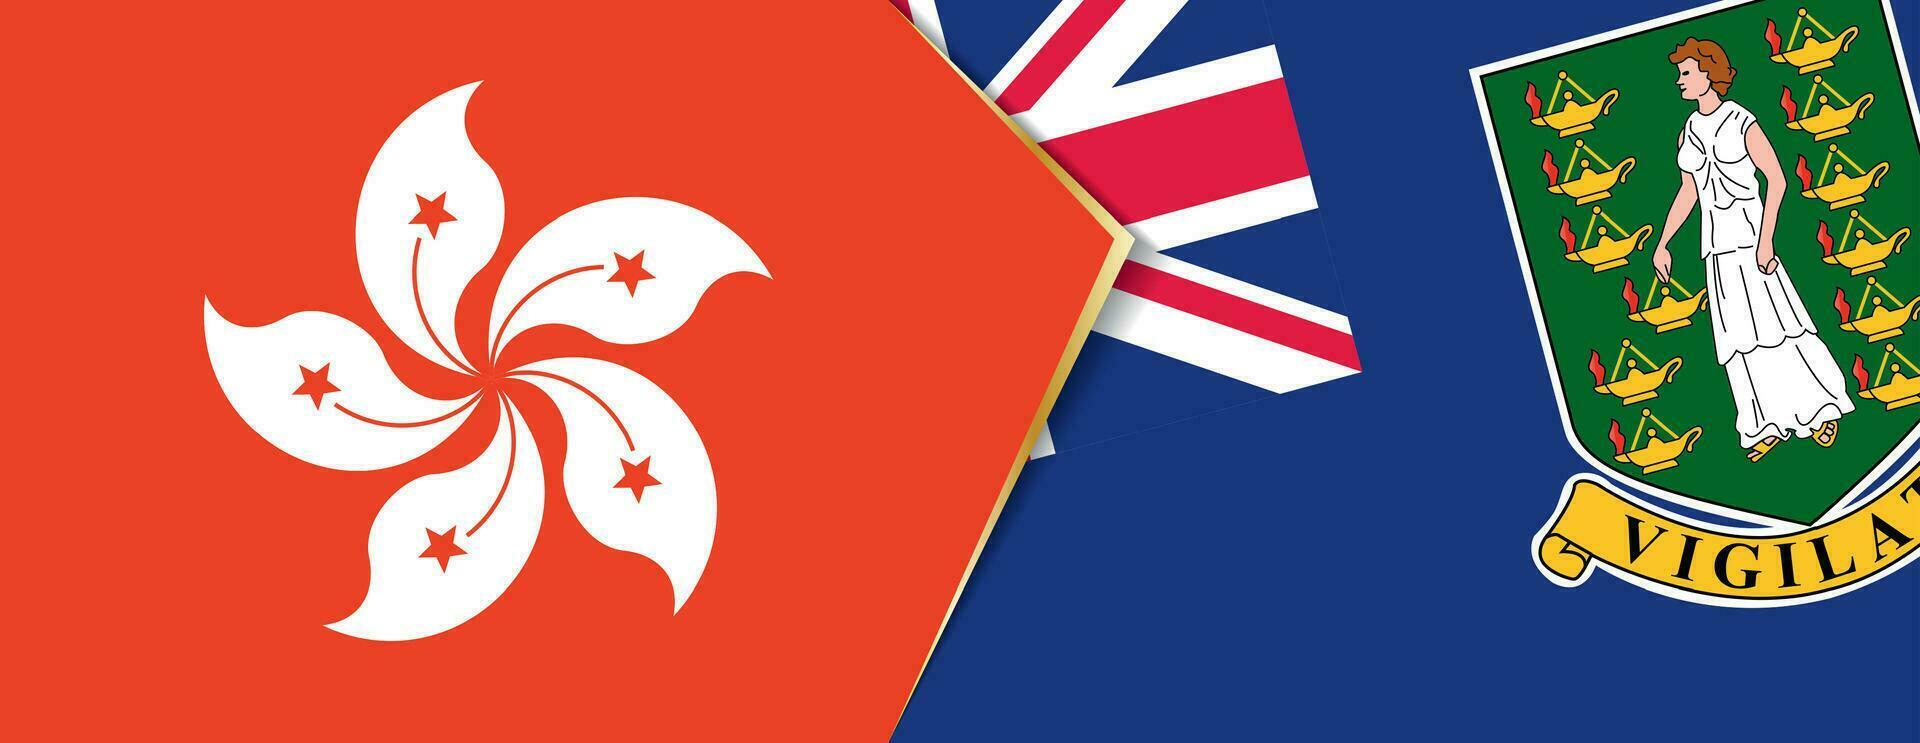 hong kong e Britannico vergine isole bandiere, Due vettore bandiere.